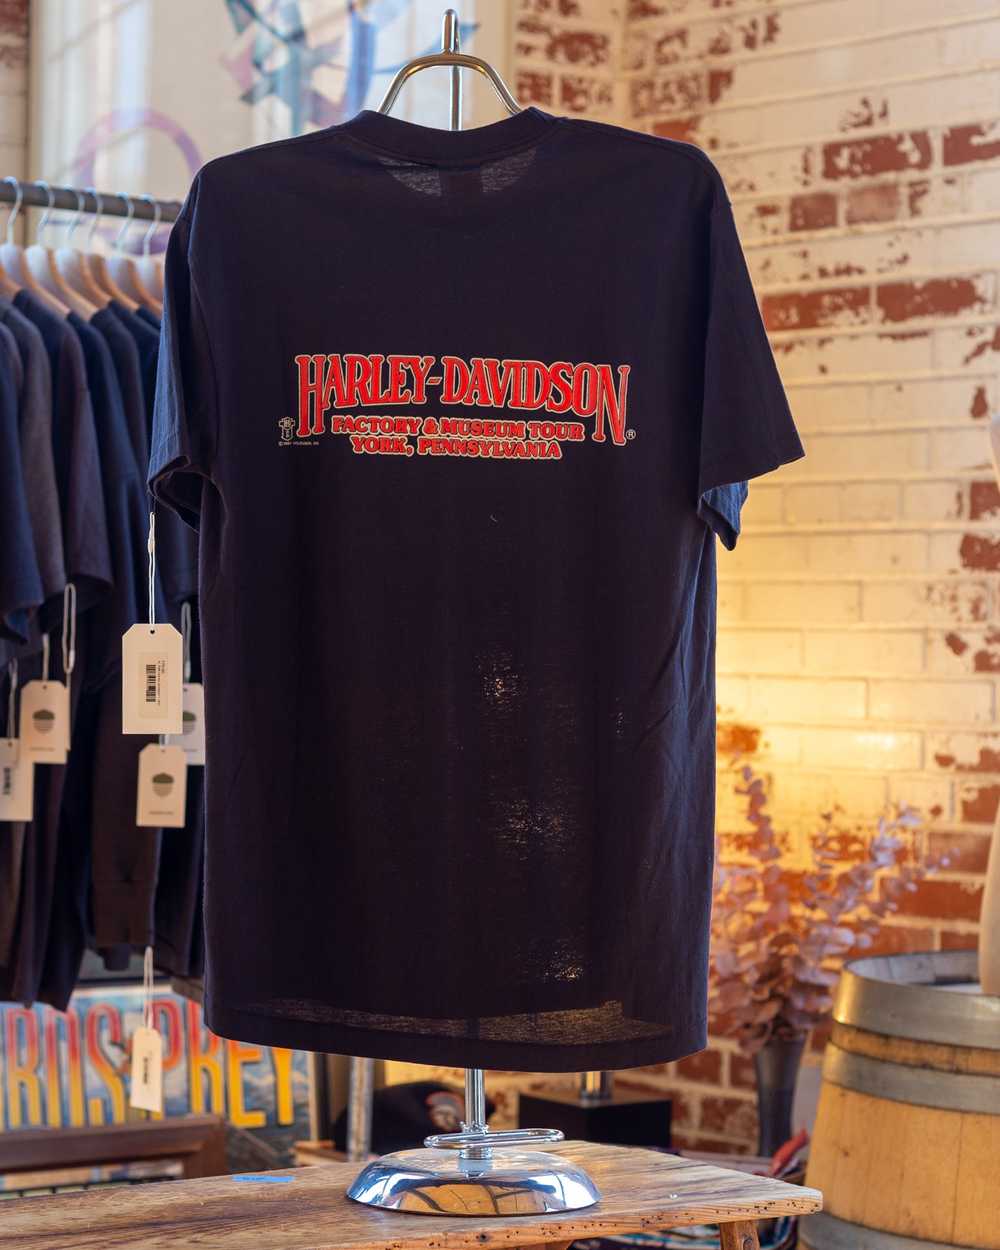 XL 1986 Harley Davidson T-shirt - image 2